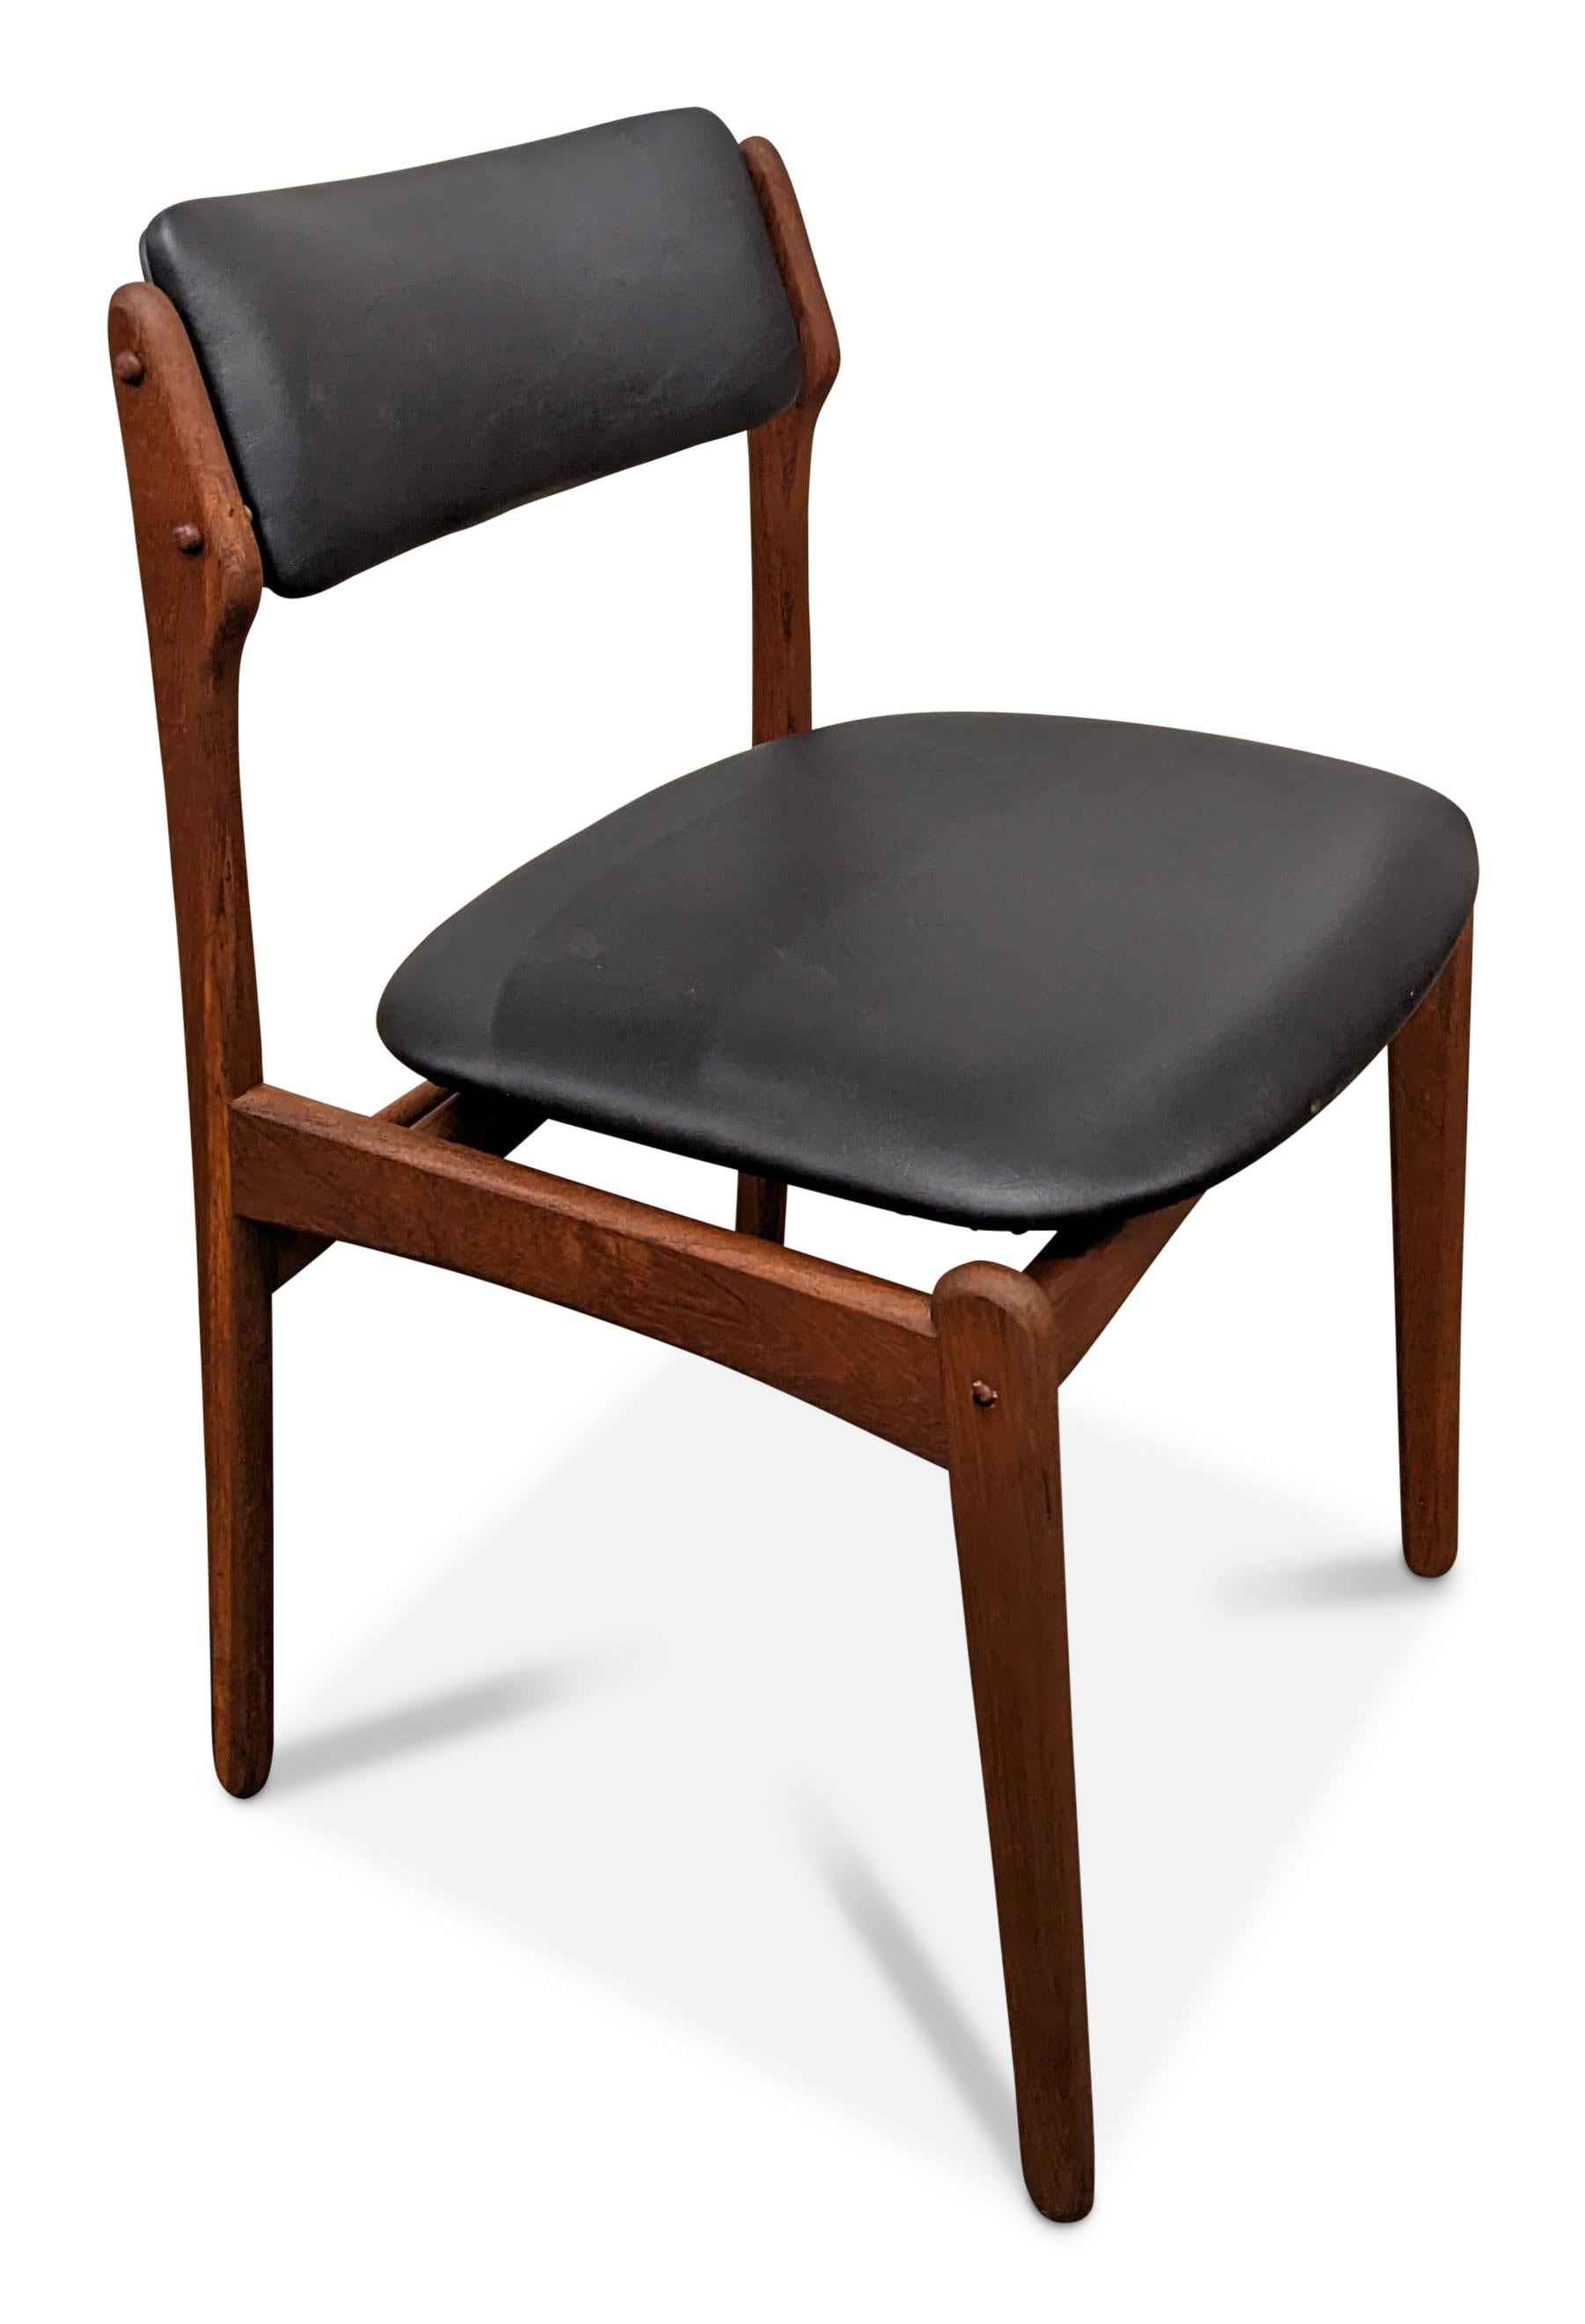 4 Erik Buch Model 49a Teak Dining Chairs, 022354 Vintage Danish Midcentury 1